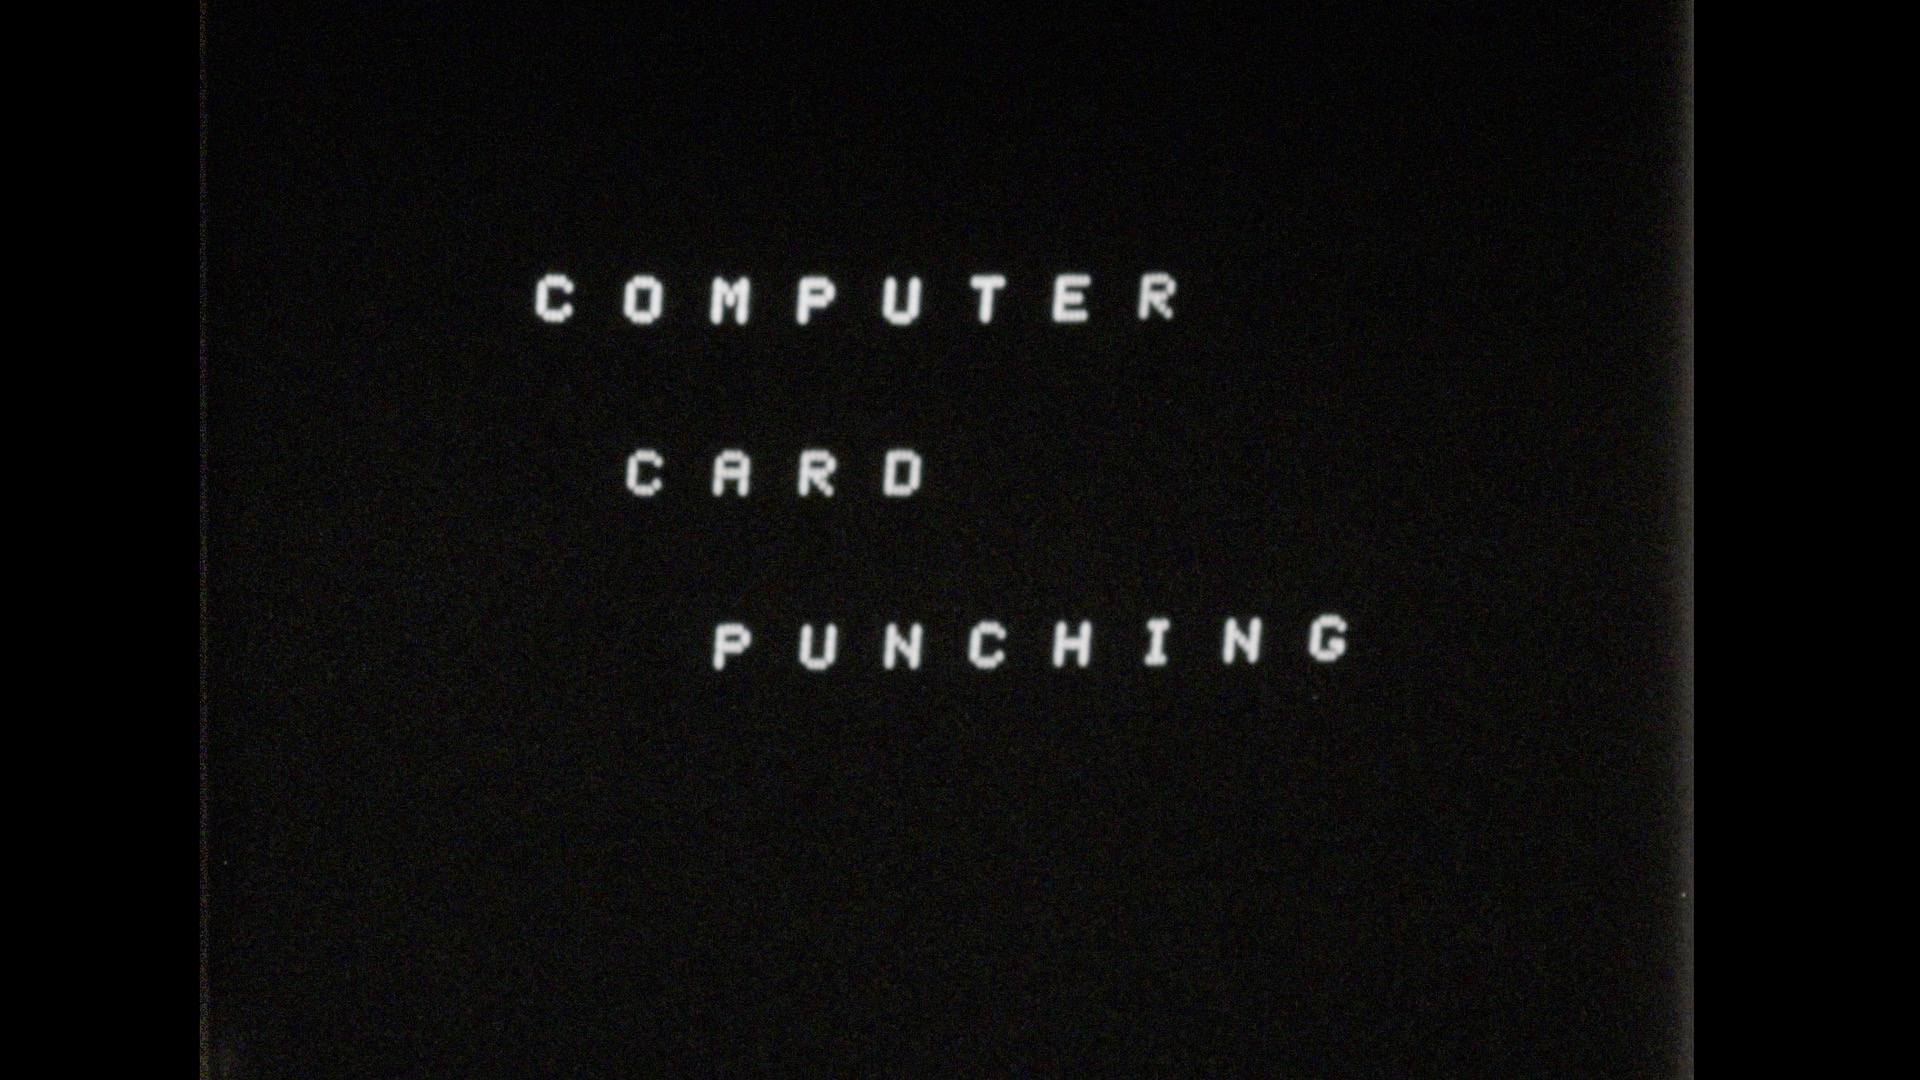 Computer Card Punching, circa 1960s